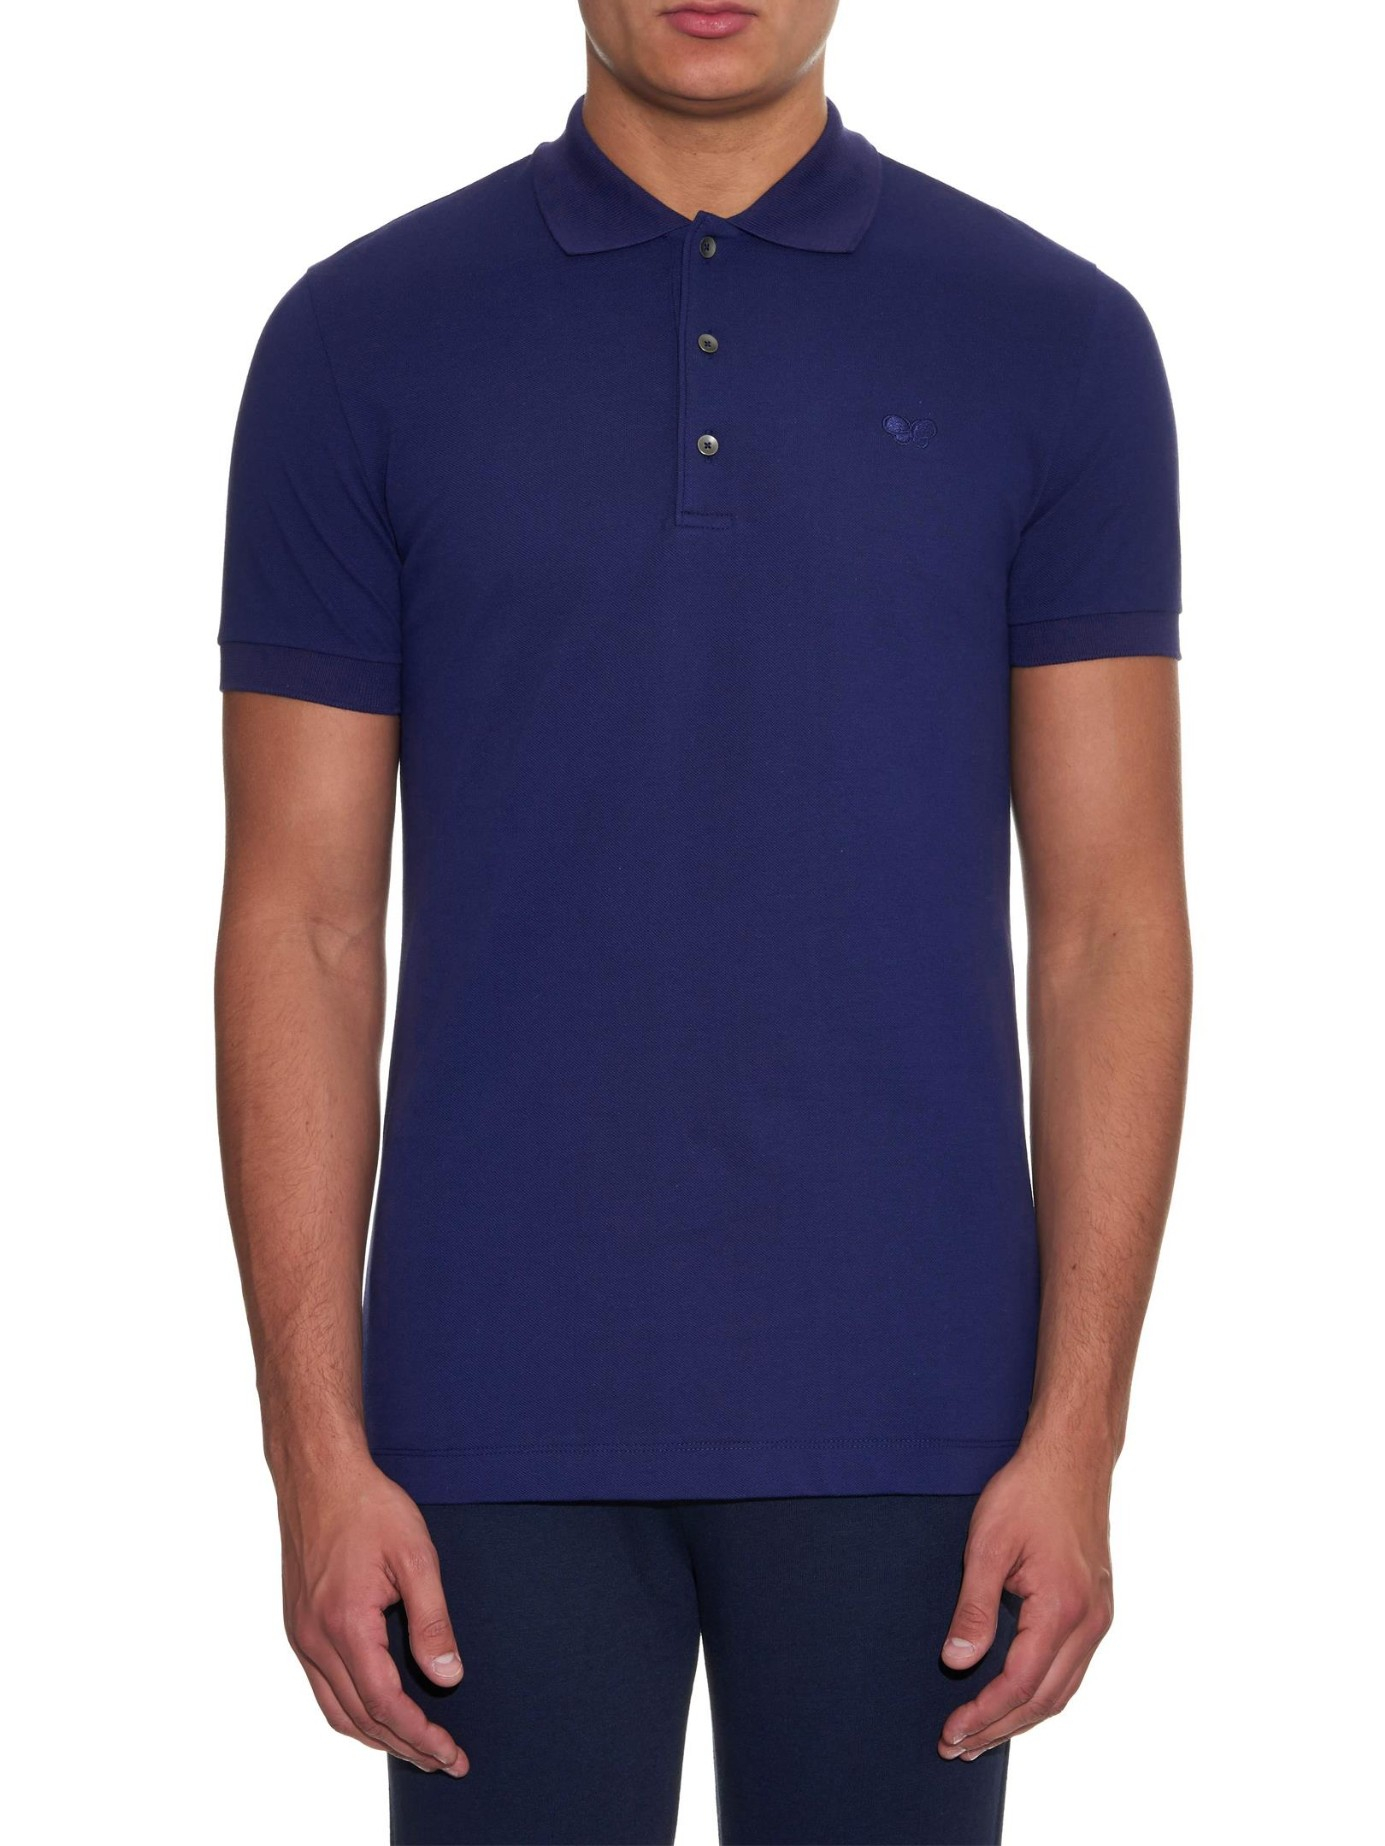 Bottega Veneta Cotton-Piqué Polo Shirt in Blue for Men - Lyst